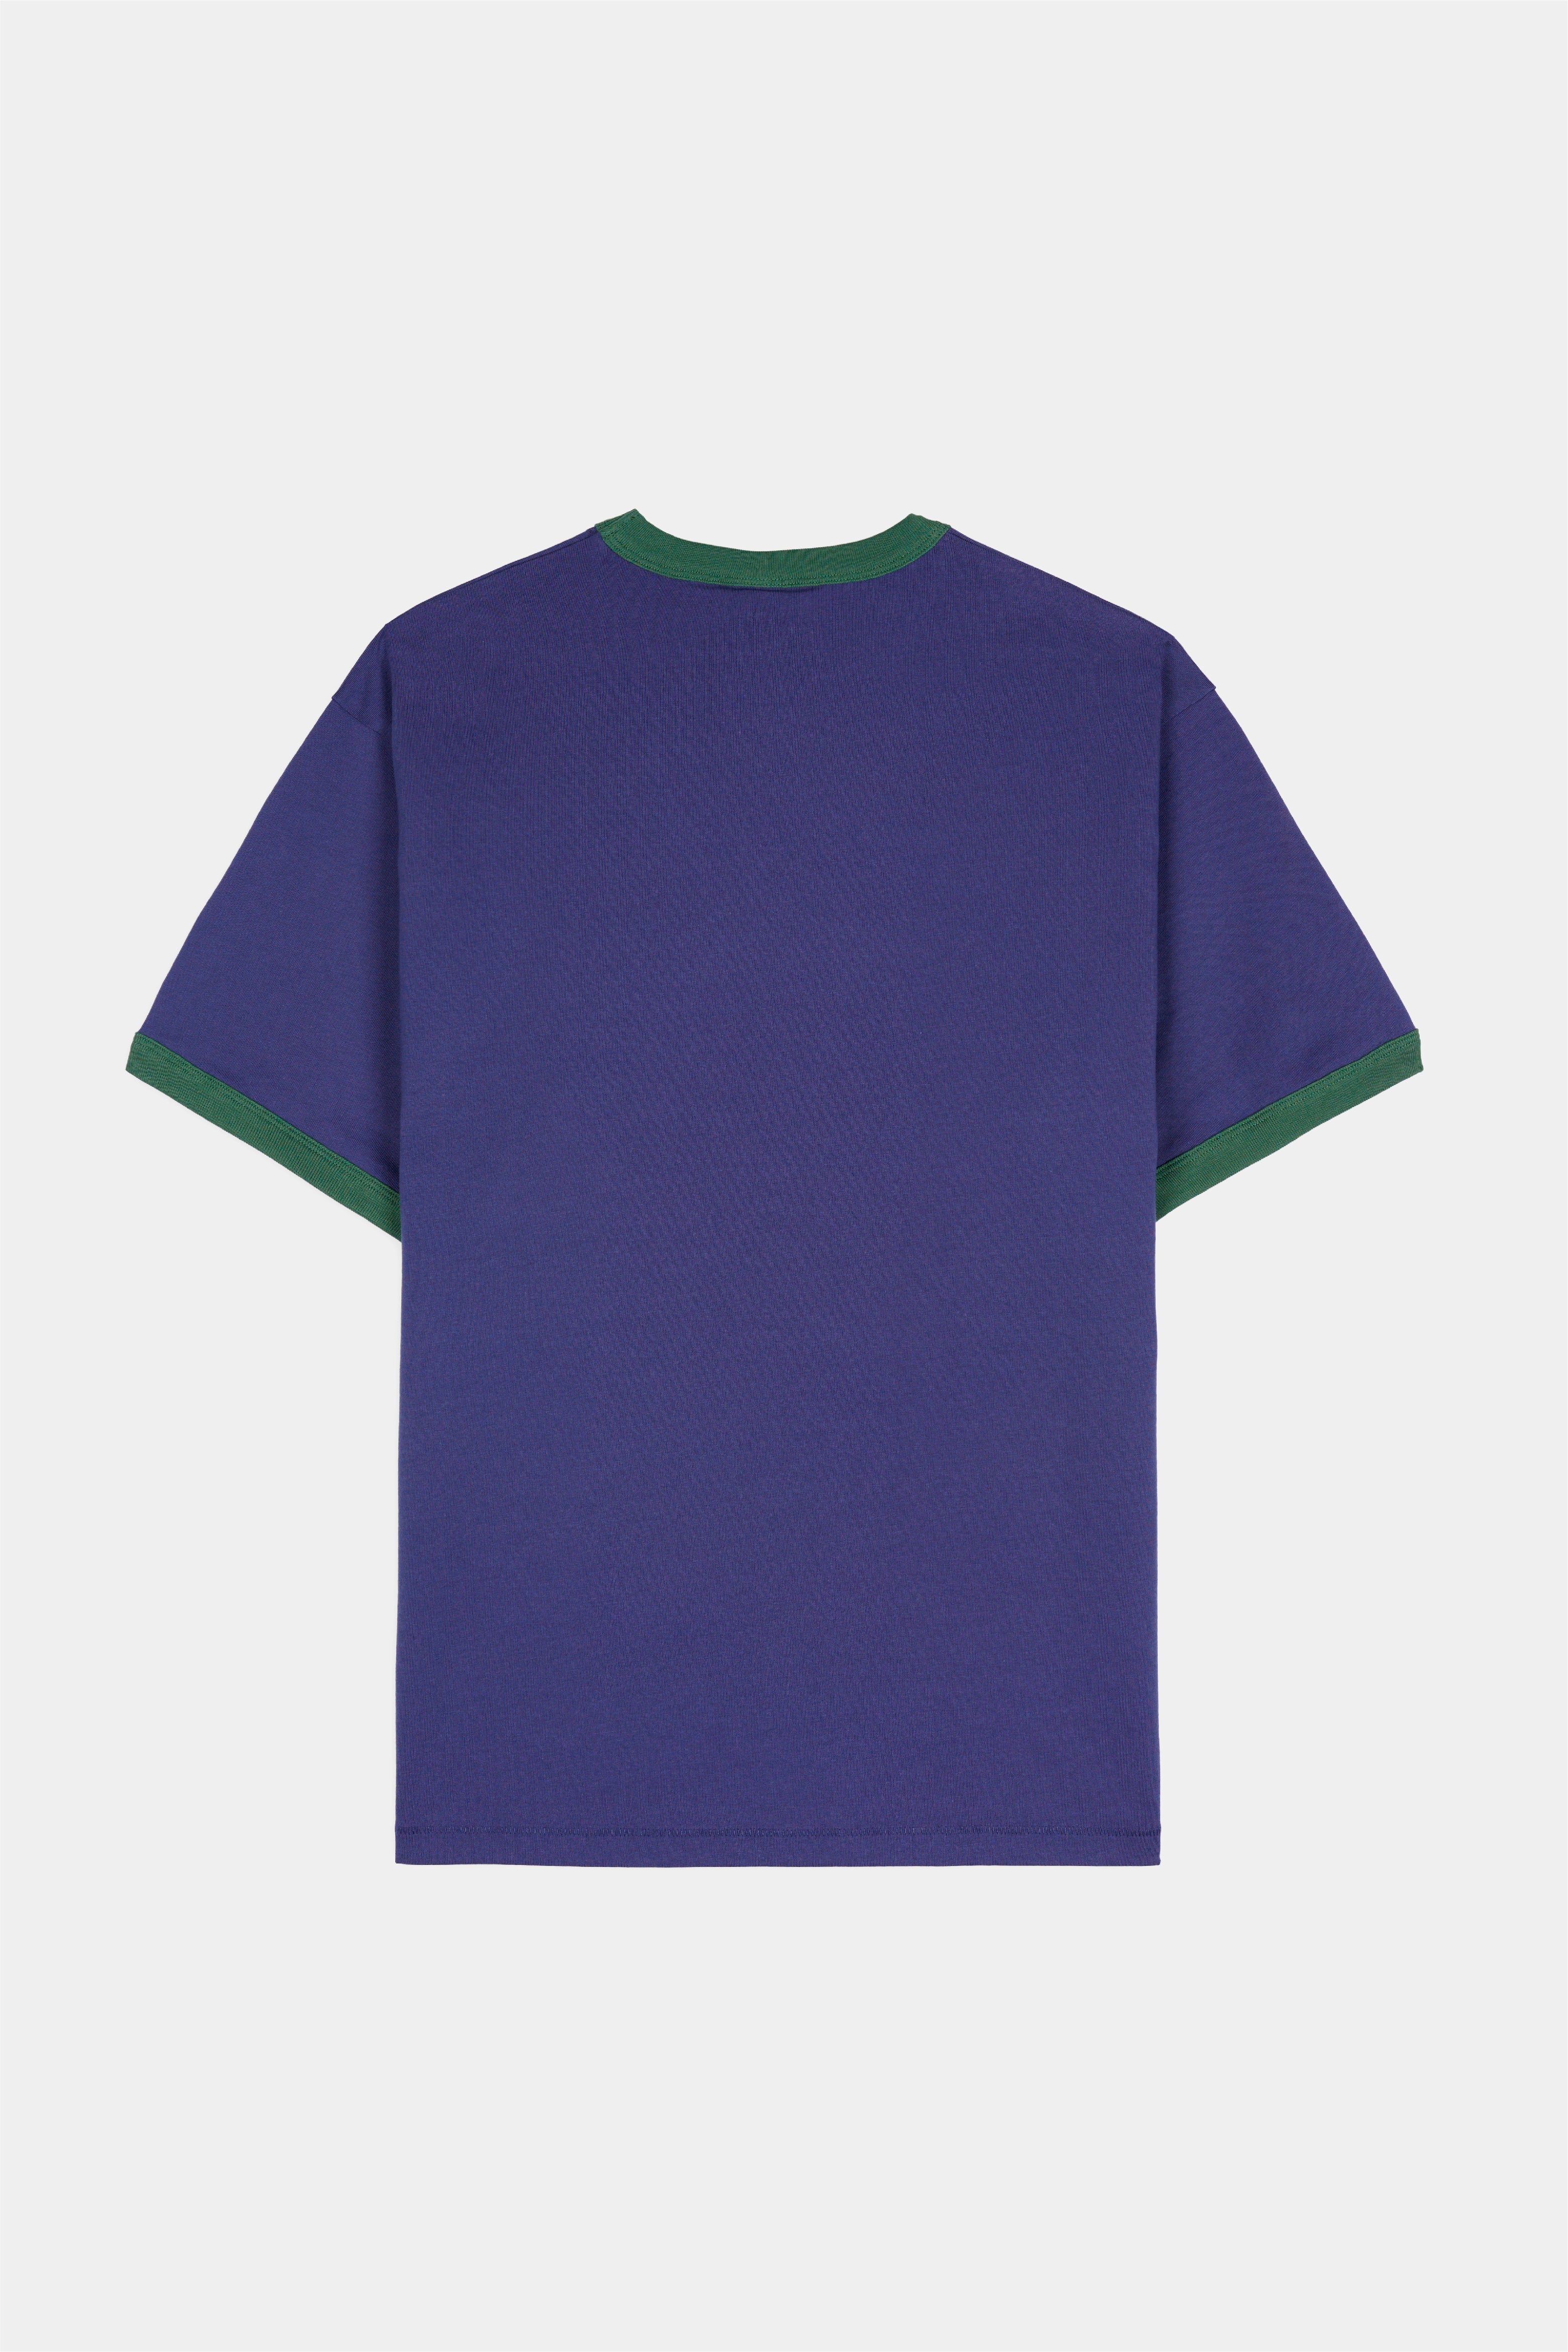 Selectshop FRAME - BRAIN DEAD Shark Attack Ringer T-Shirt T-Shirts Concept Store Dubai